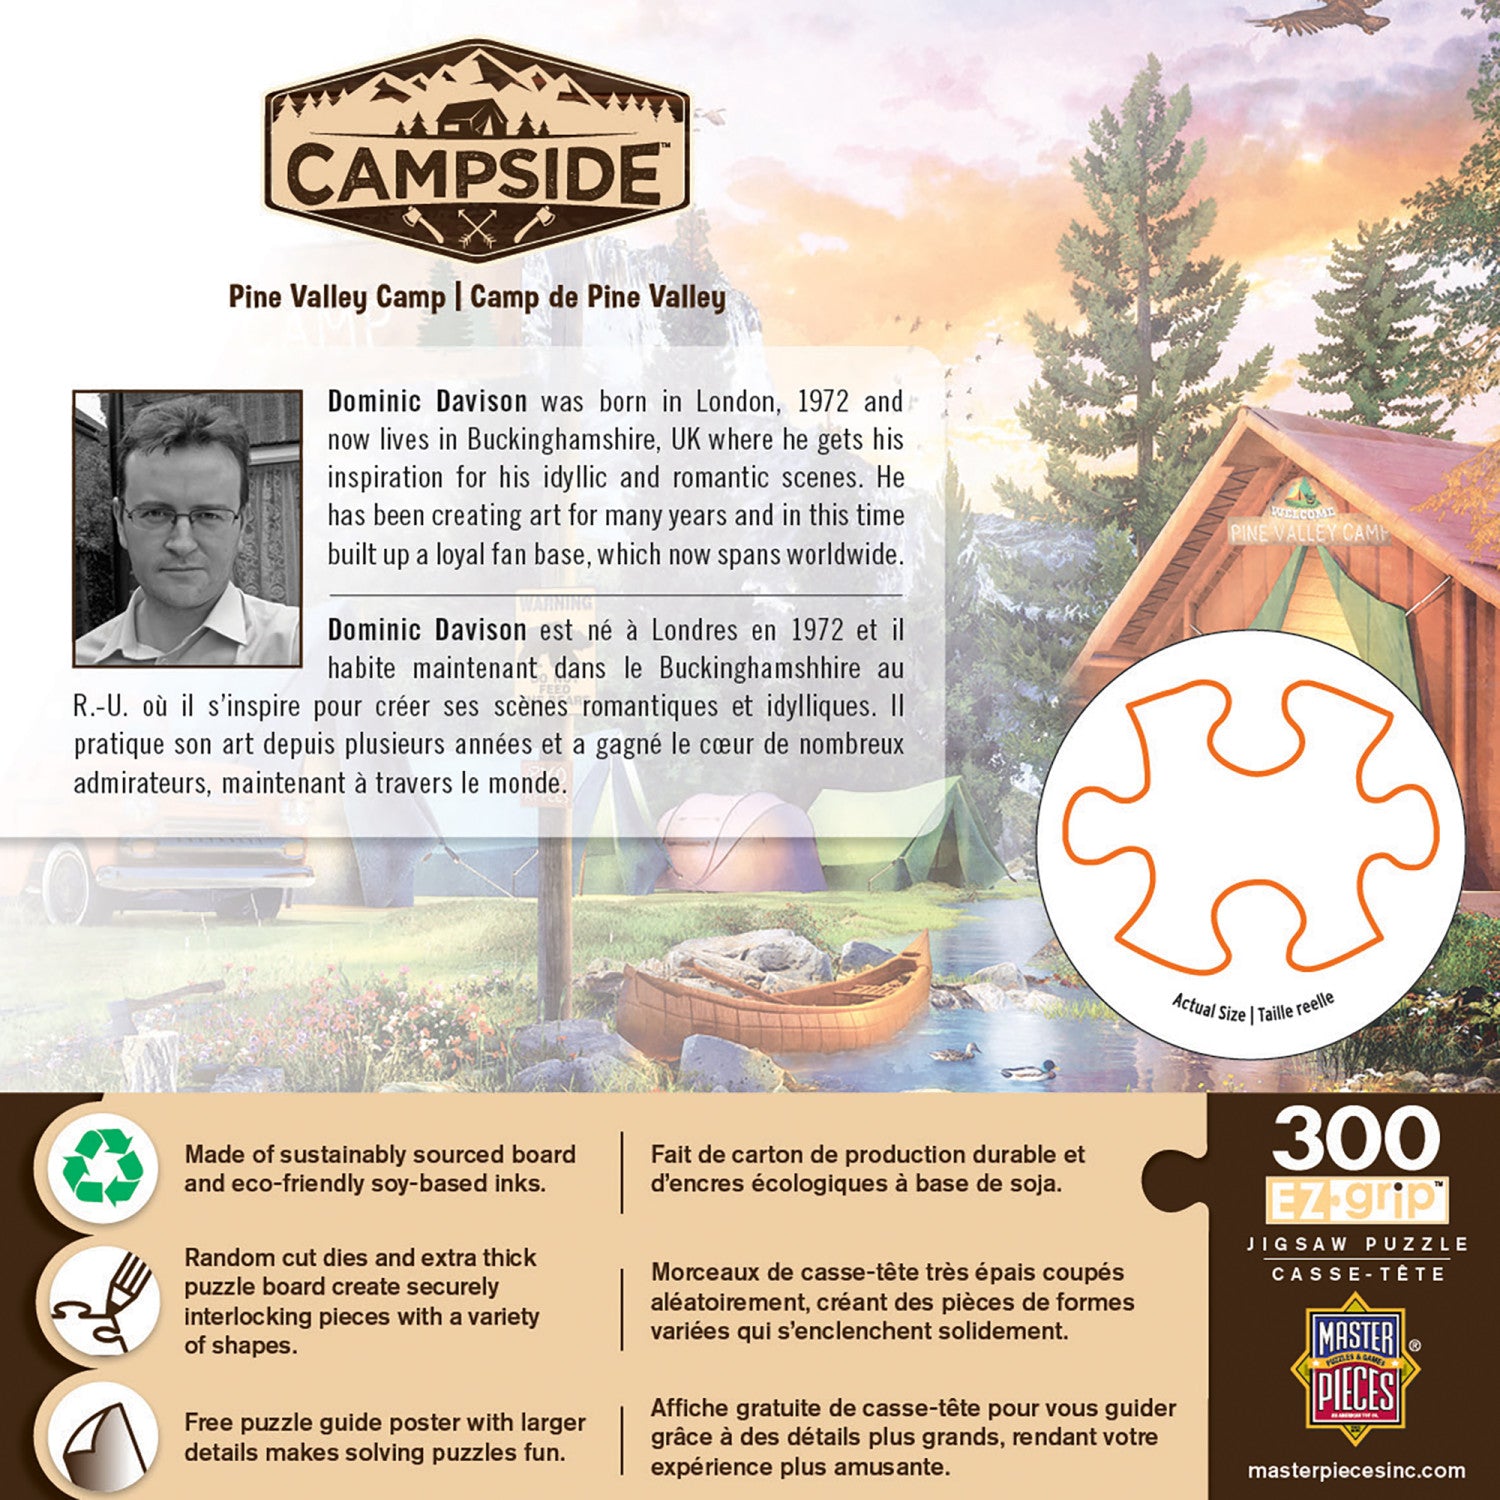 Campside - Pine Valley Camp 300 Piece EZ Grip Jigsaw Puzzle